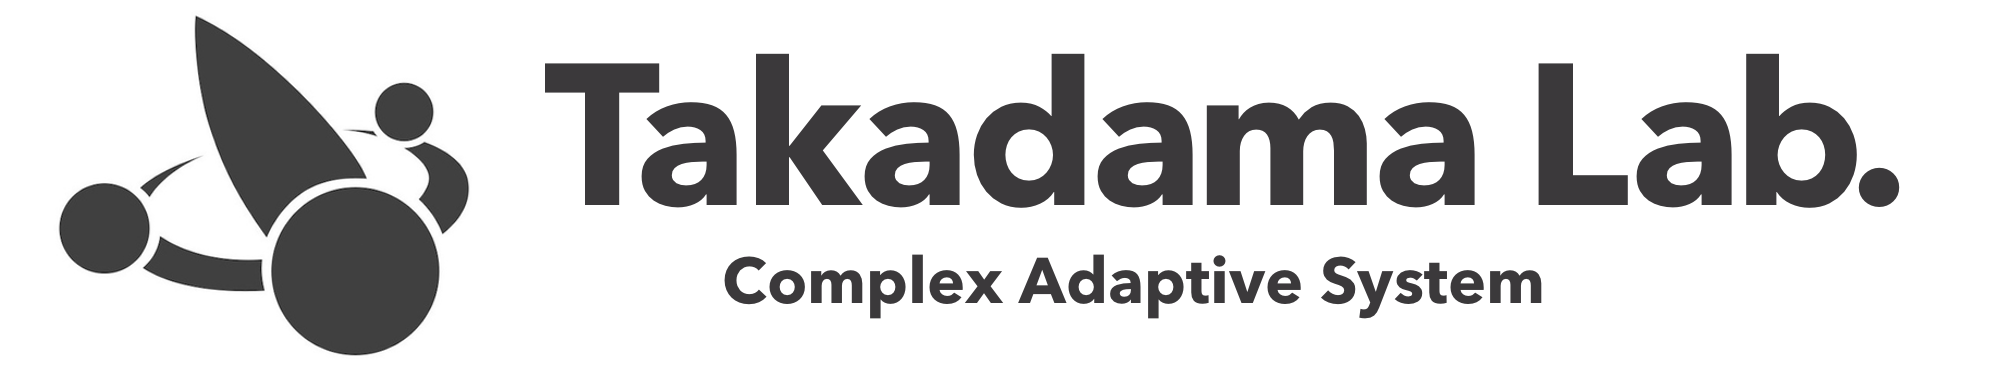 Takadama Lab. – Complex Adaptive System Laboratory